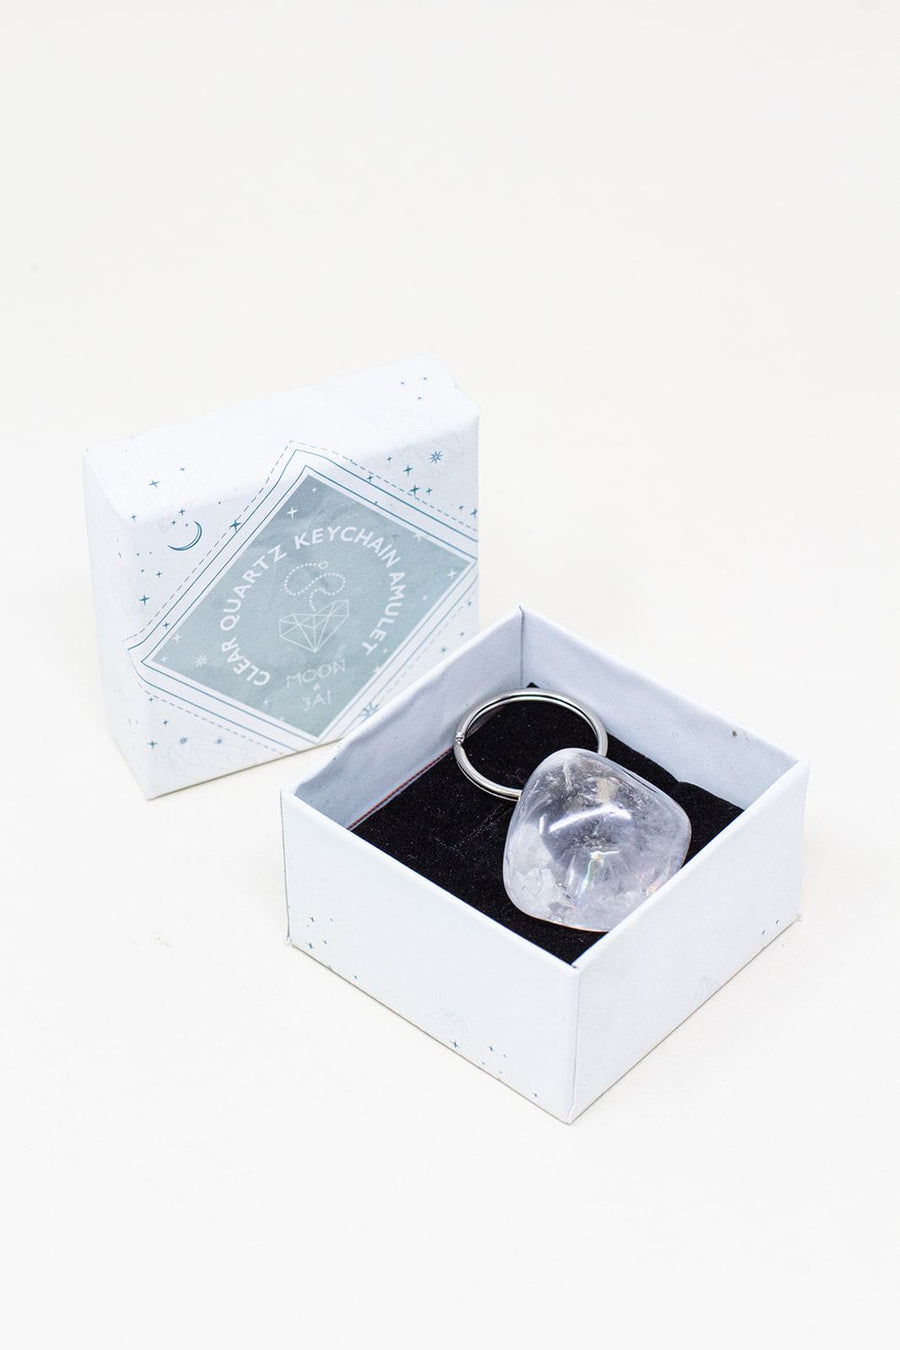 Clear quartz amulet in its box.